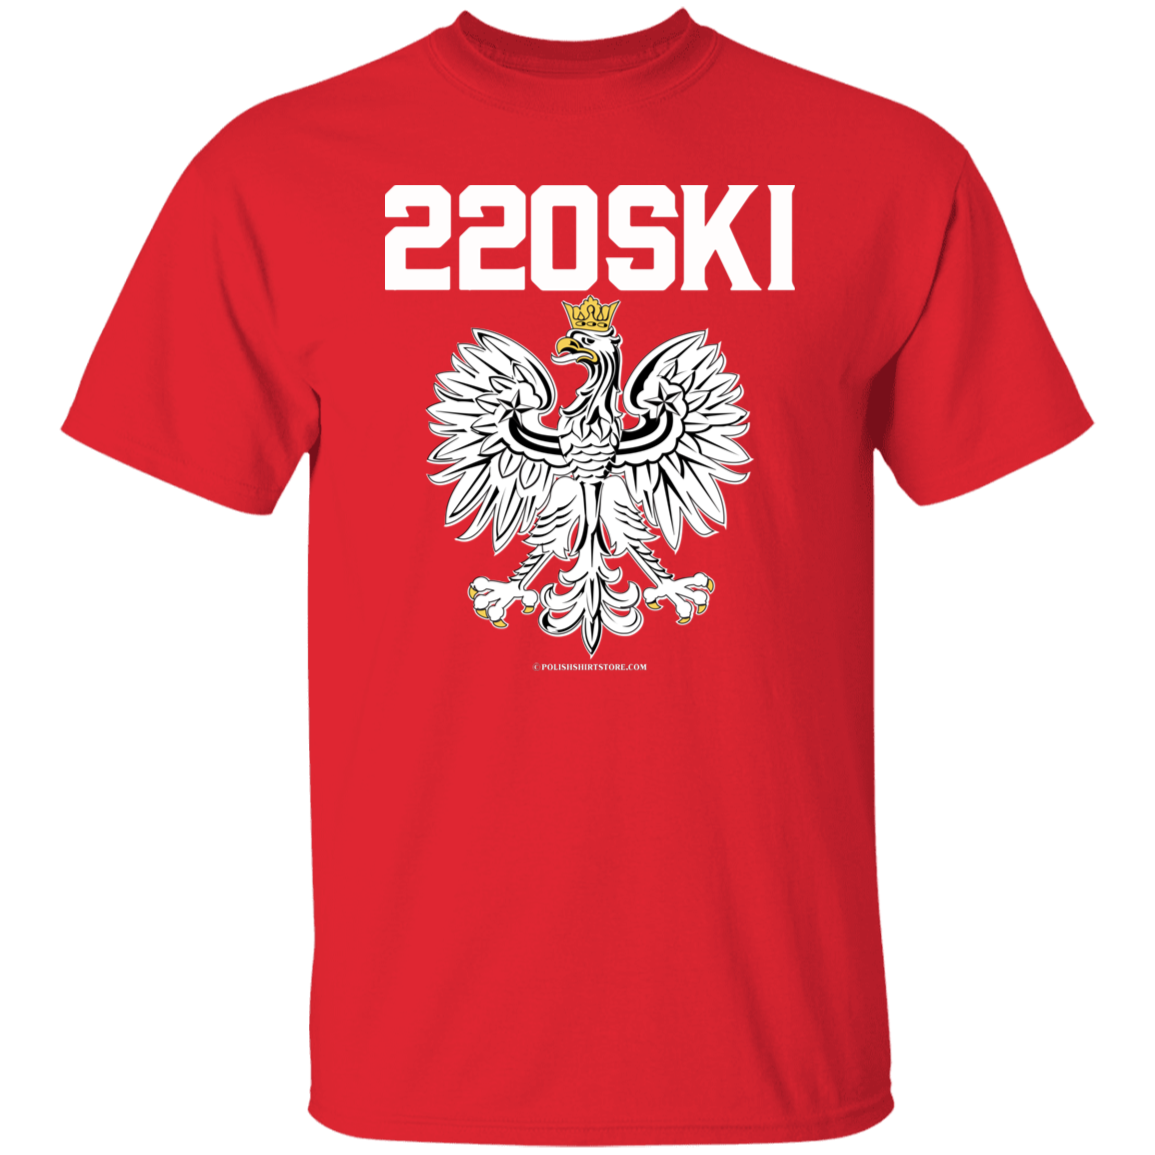 220SKI Apparel CustomCat G500 5.3 oz. T-Shirt Red S